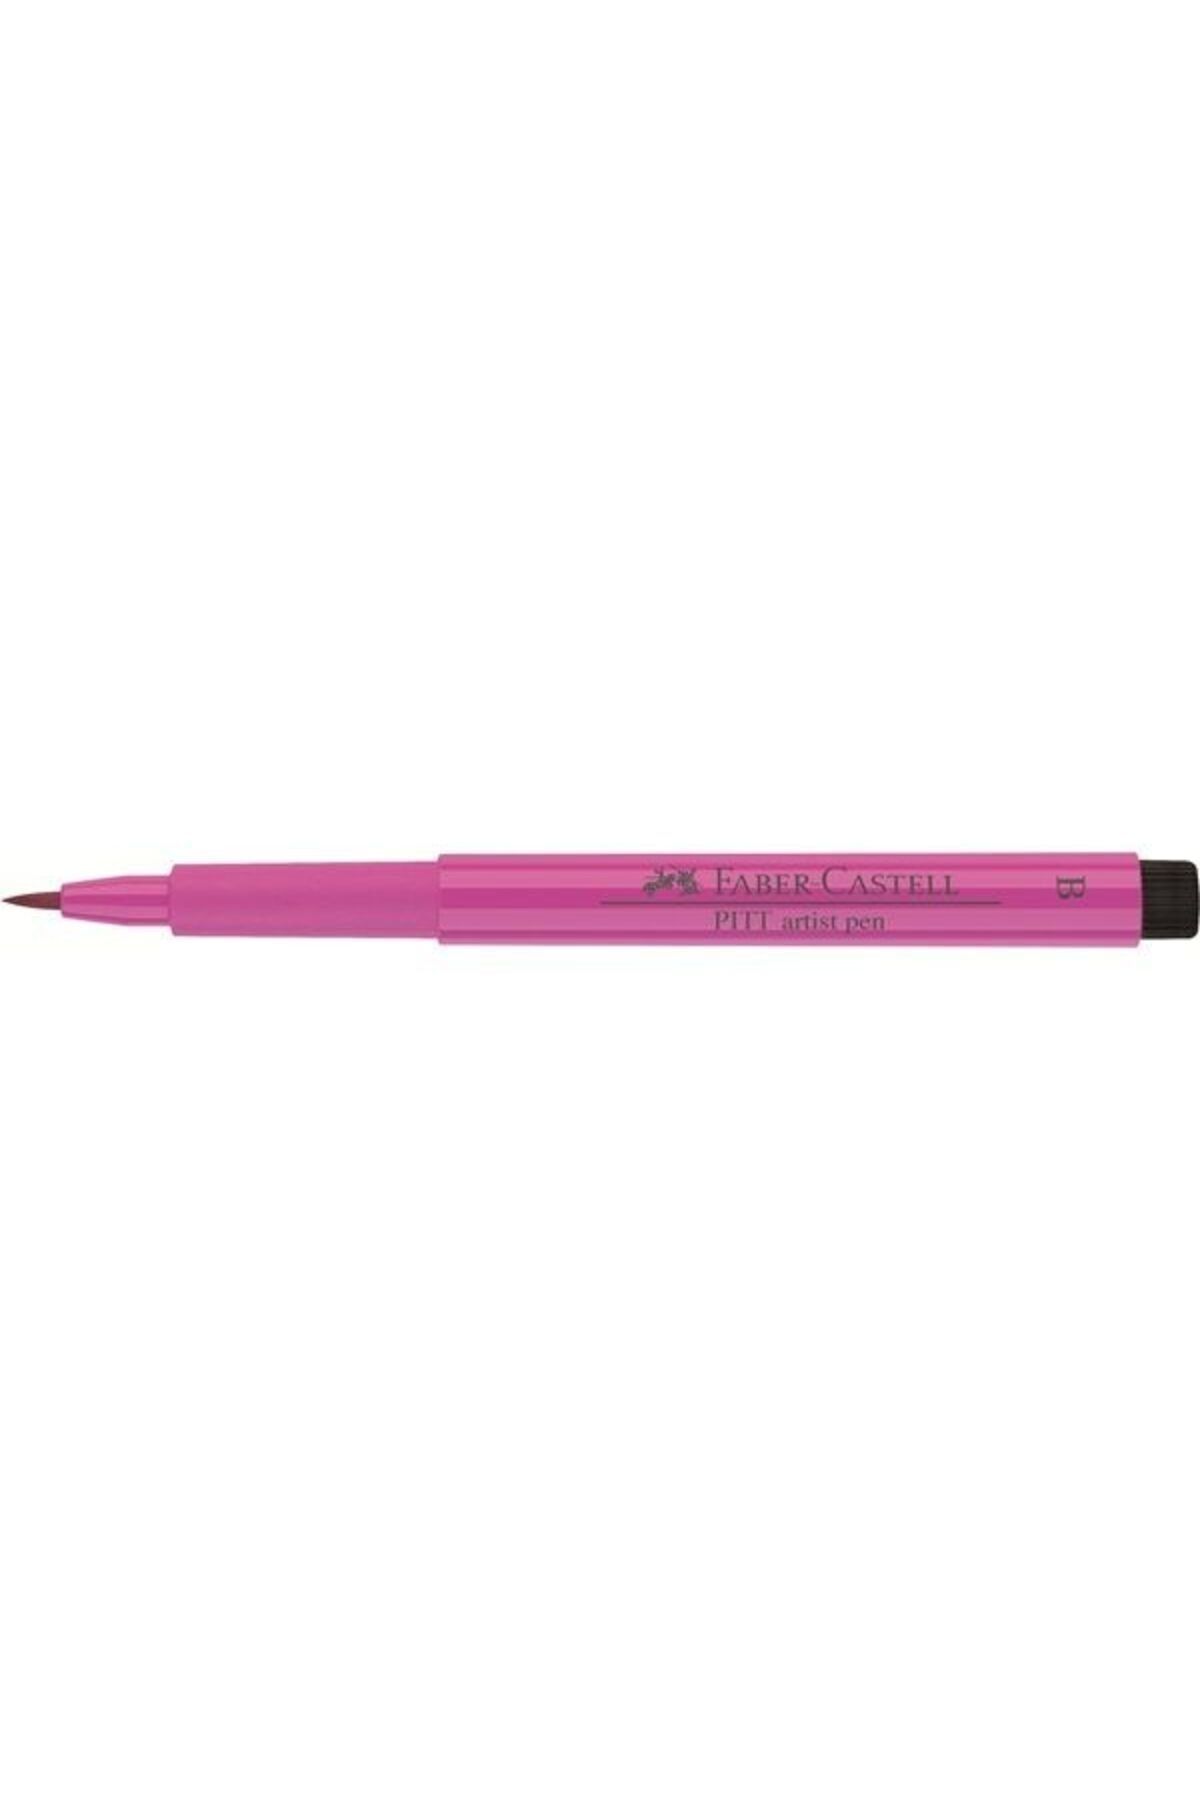 Faber Castell Pitt Artist Pen Çizim Kalemi Fırça Uçlu 125***middle Purple Pink (MORUMSU PEMBE-ORTA)